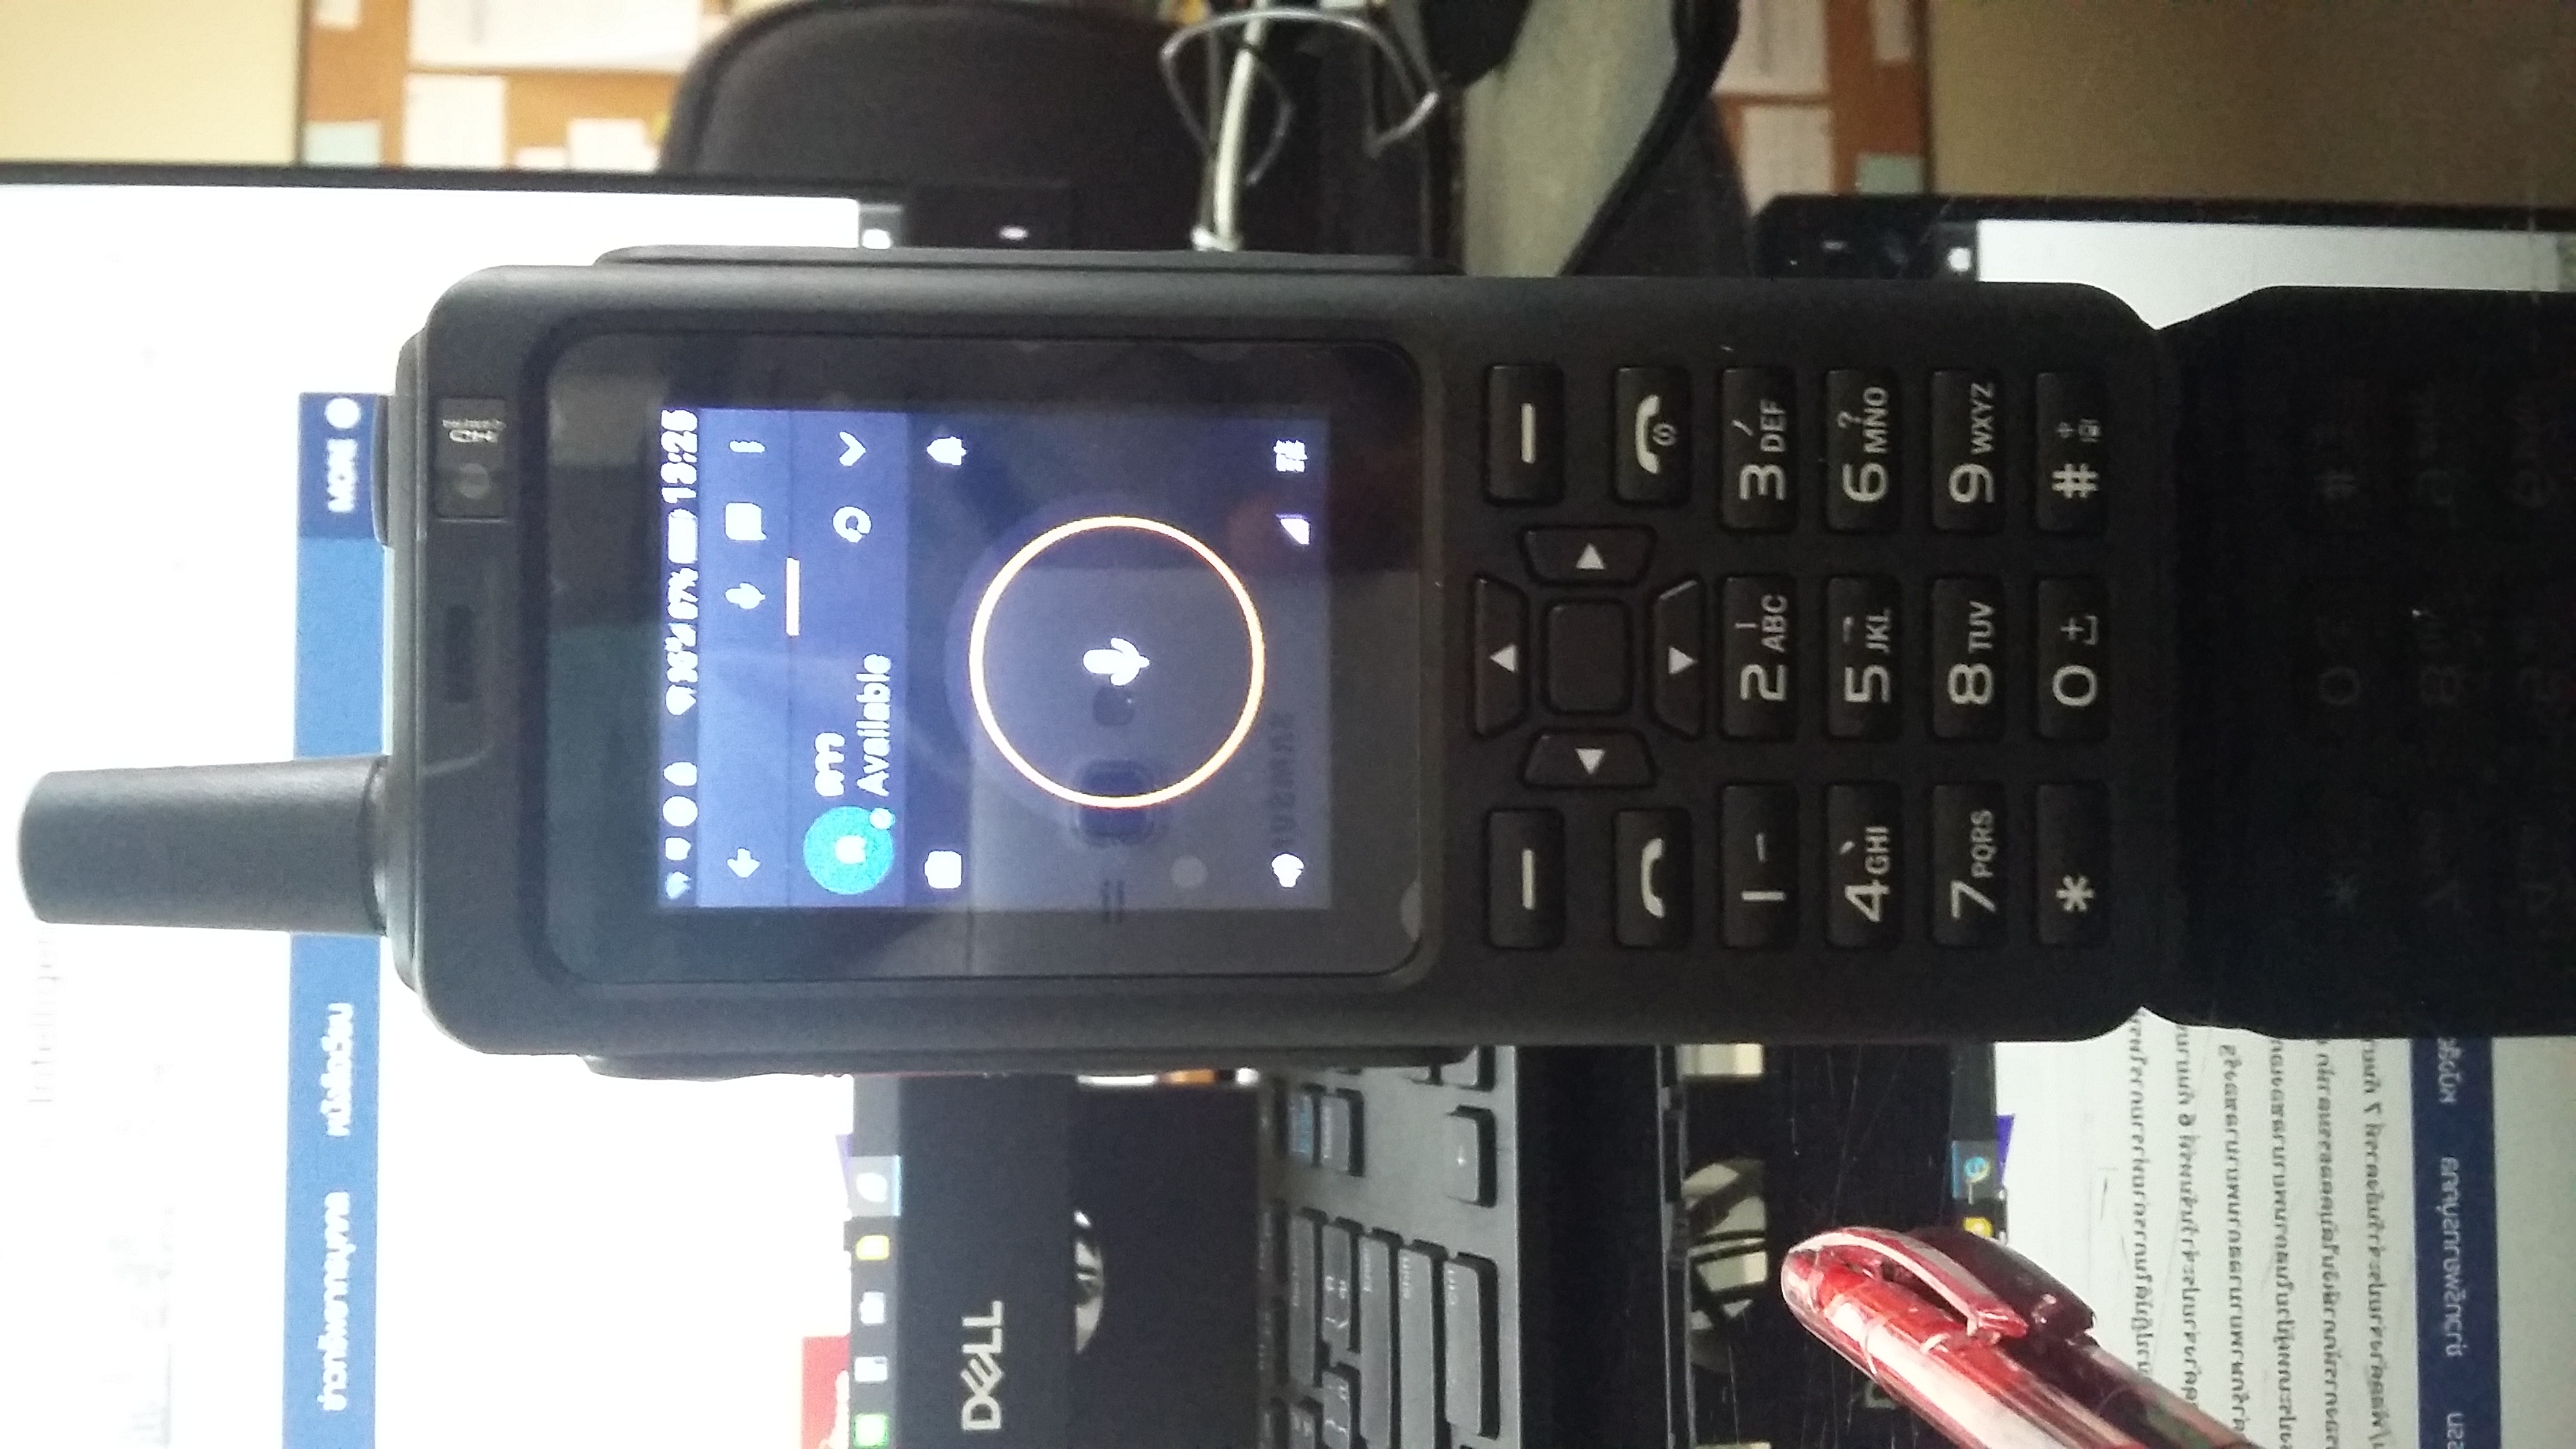 UNIWA Alps F40 Zello Mobile Phone IP65 Waterproof 2.4 Touchscreen 4G LTE  MTK6737M Quad Core 1GB+8GB Smartphone Lazada